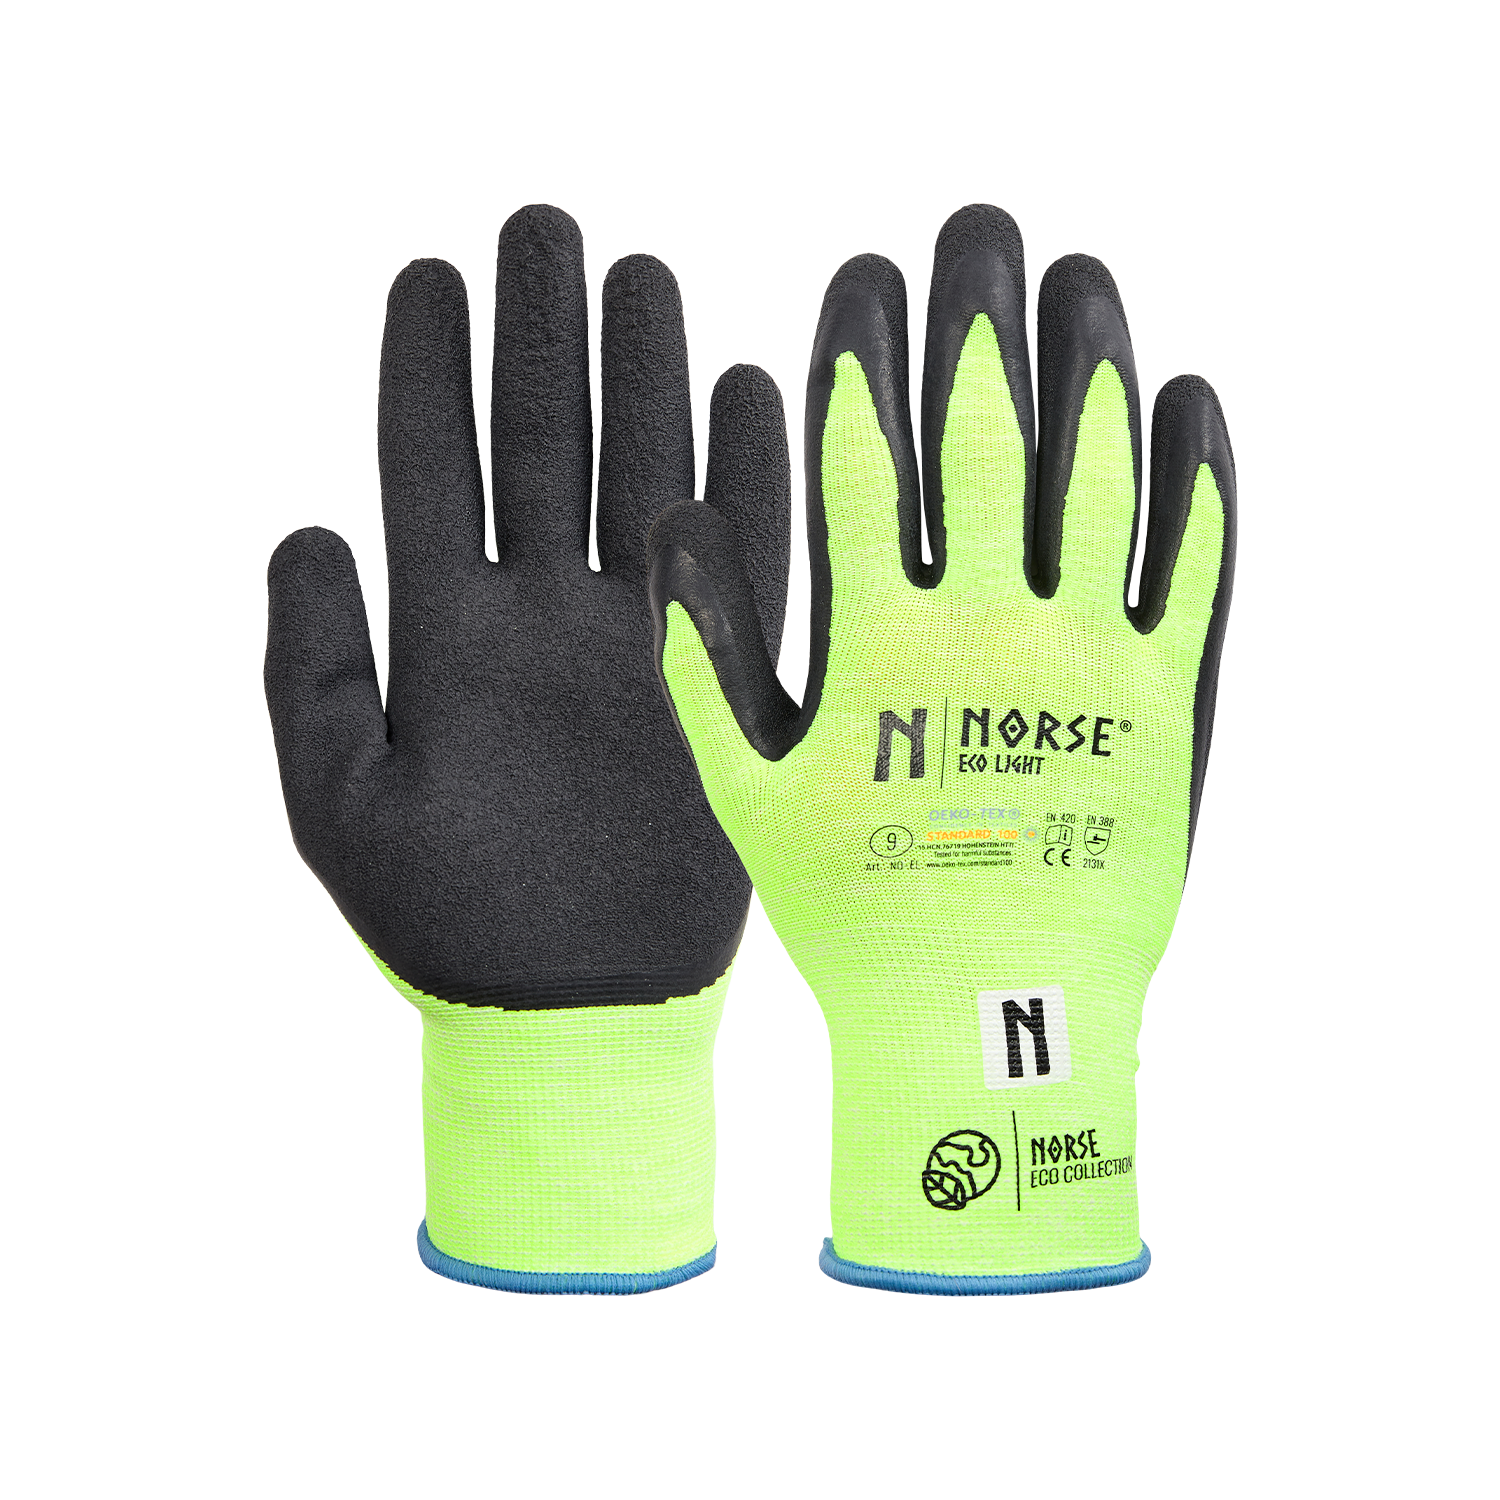 NORSE Eco Light assembly gloves size 8